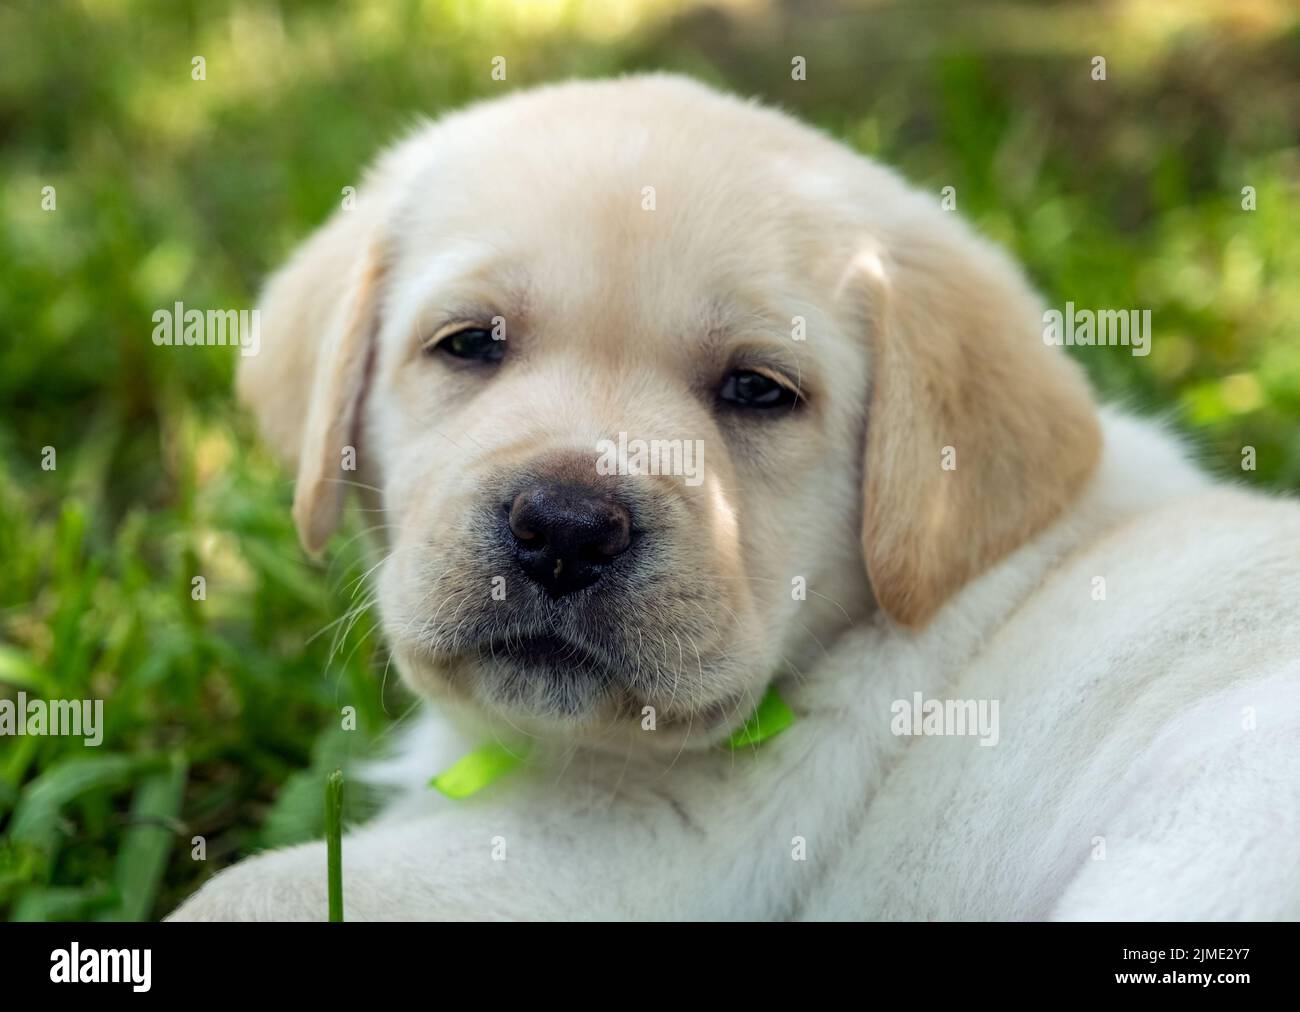 Labrador puppy in green grass Stock Photo